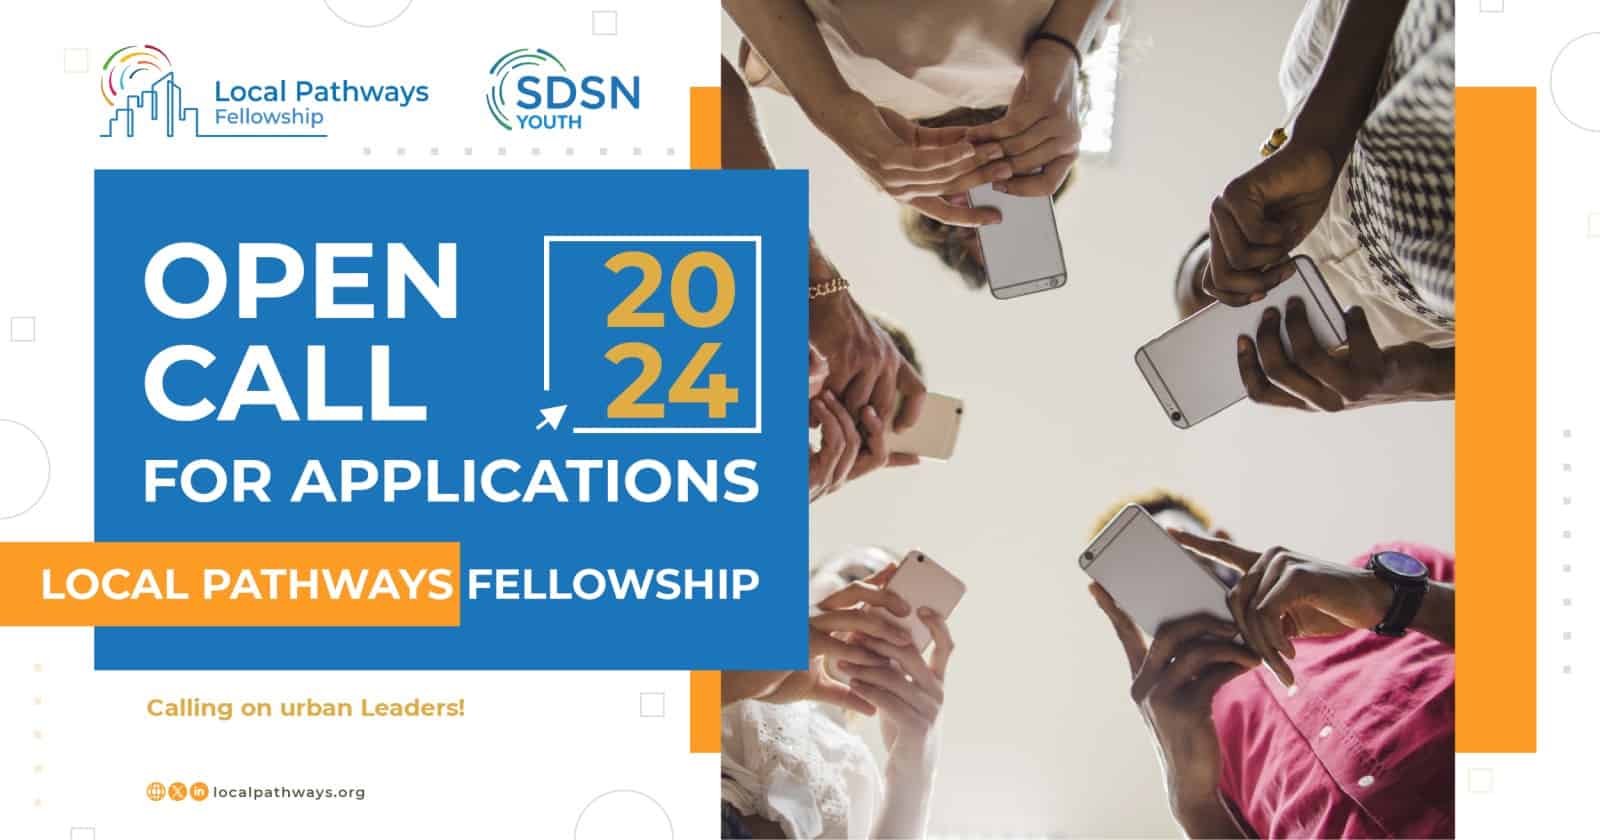 UN SDSN Youth Local Pathways Fellowship